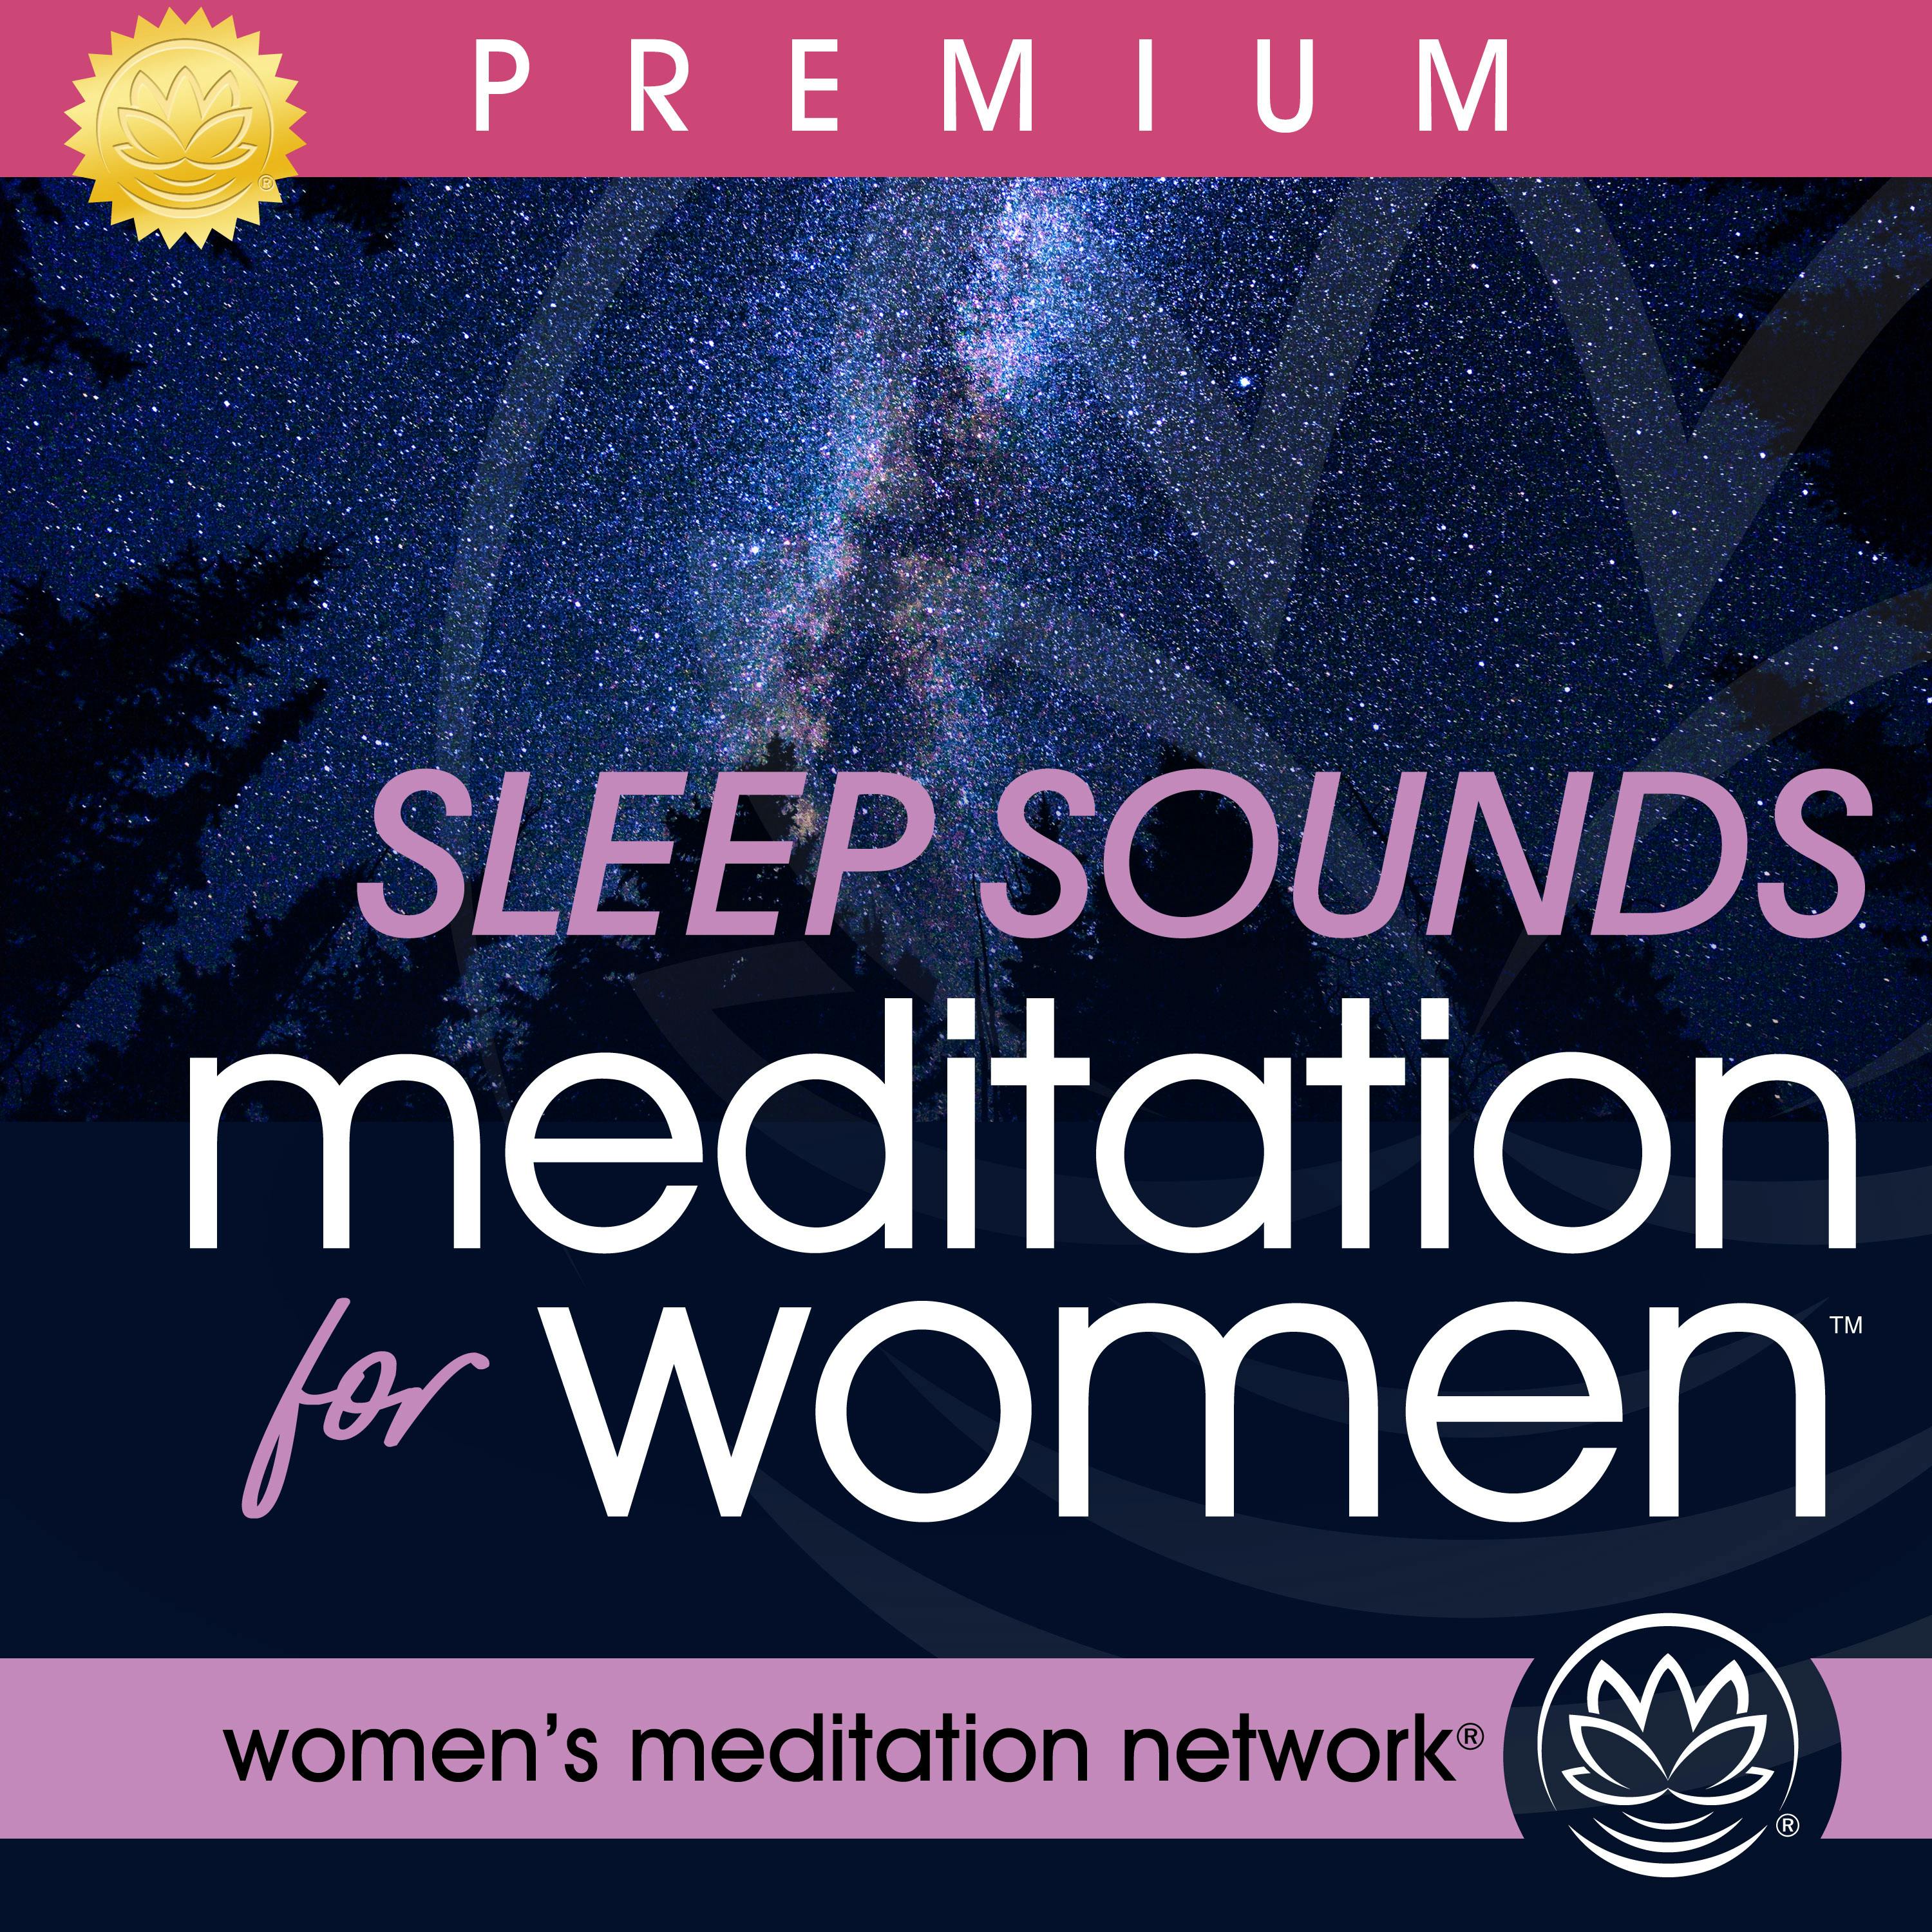 Sleep Sounds Meditation for Women PREMIUM podcast tile